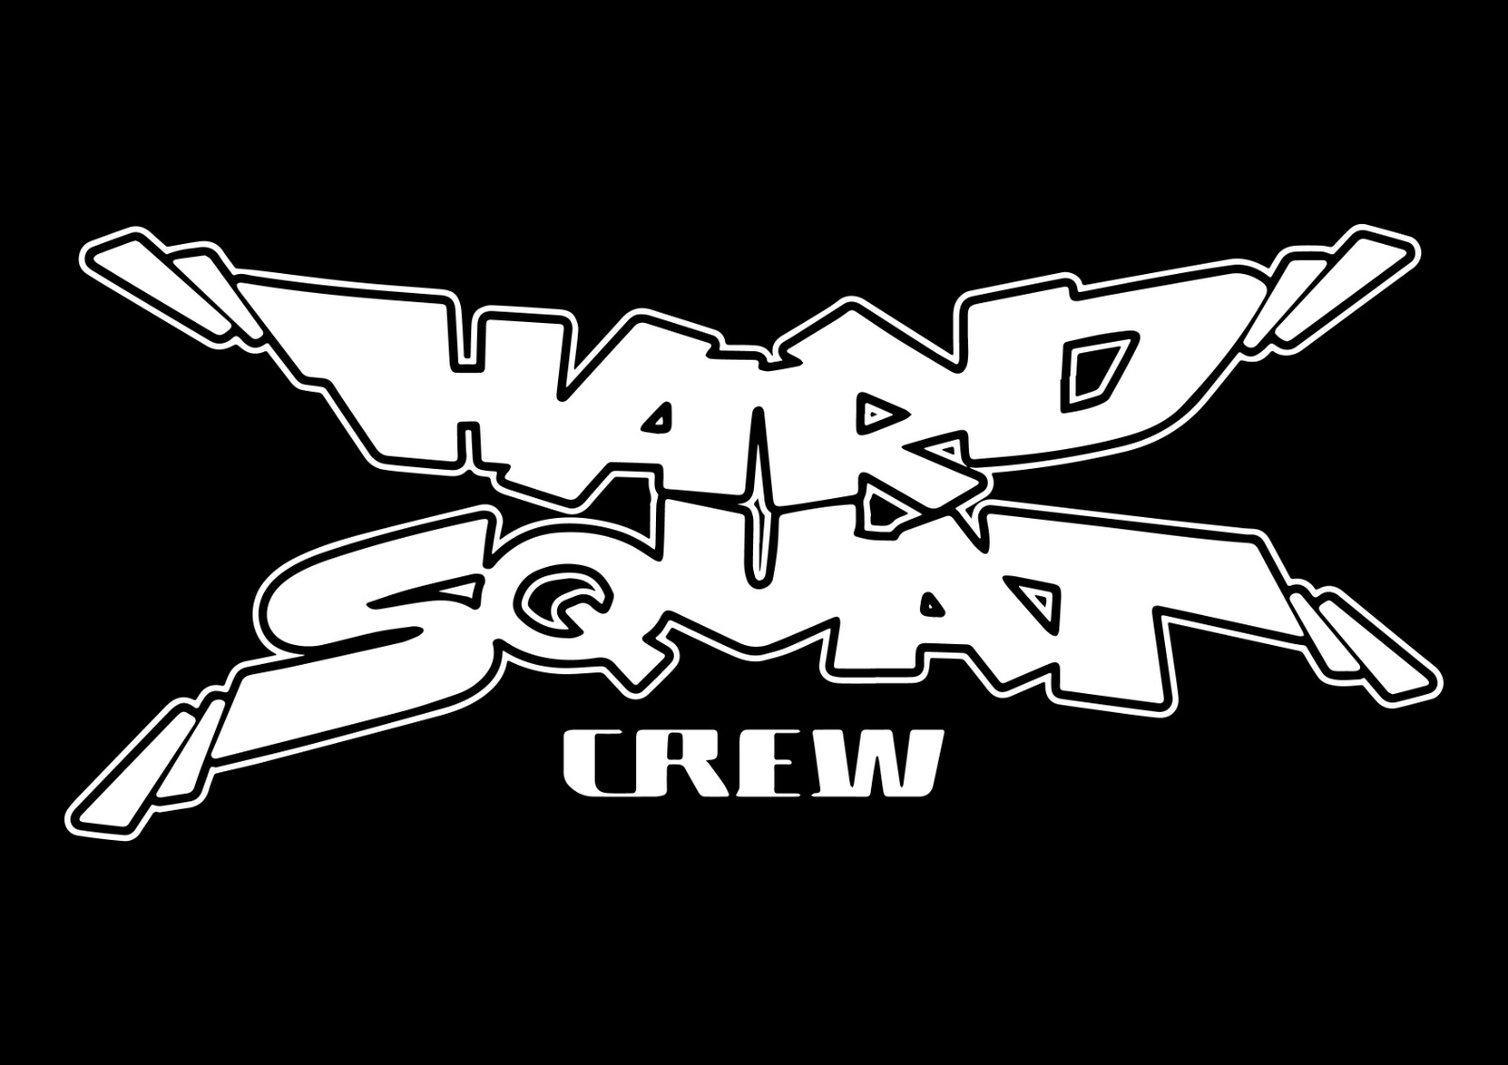 Hard Squat crew  Home